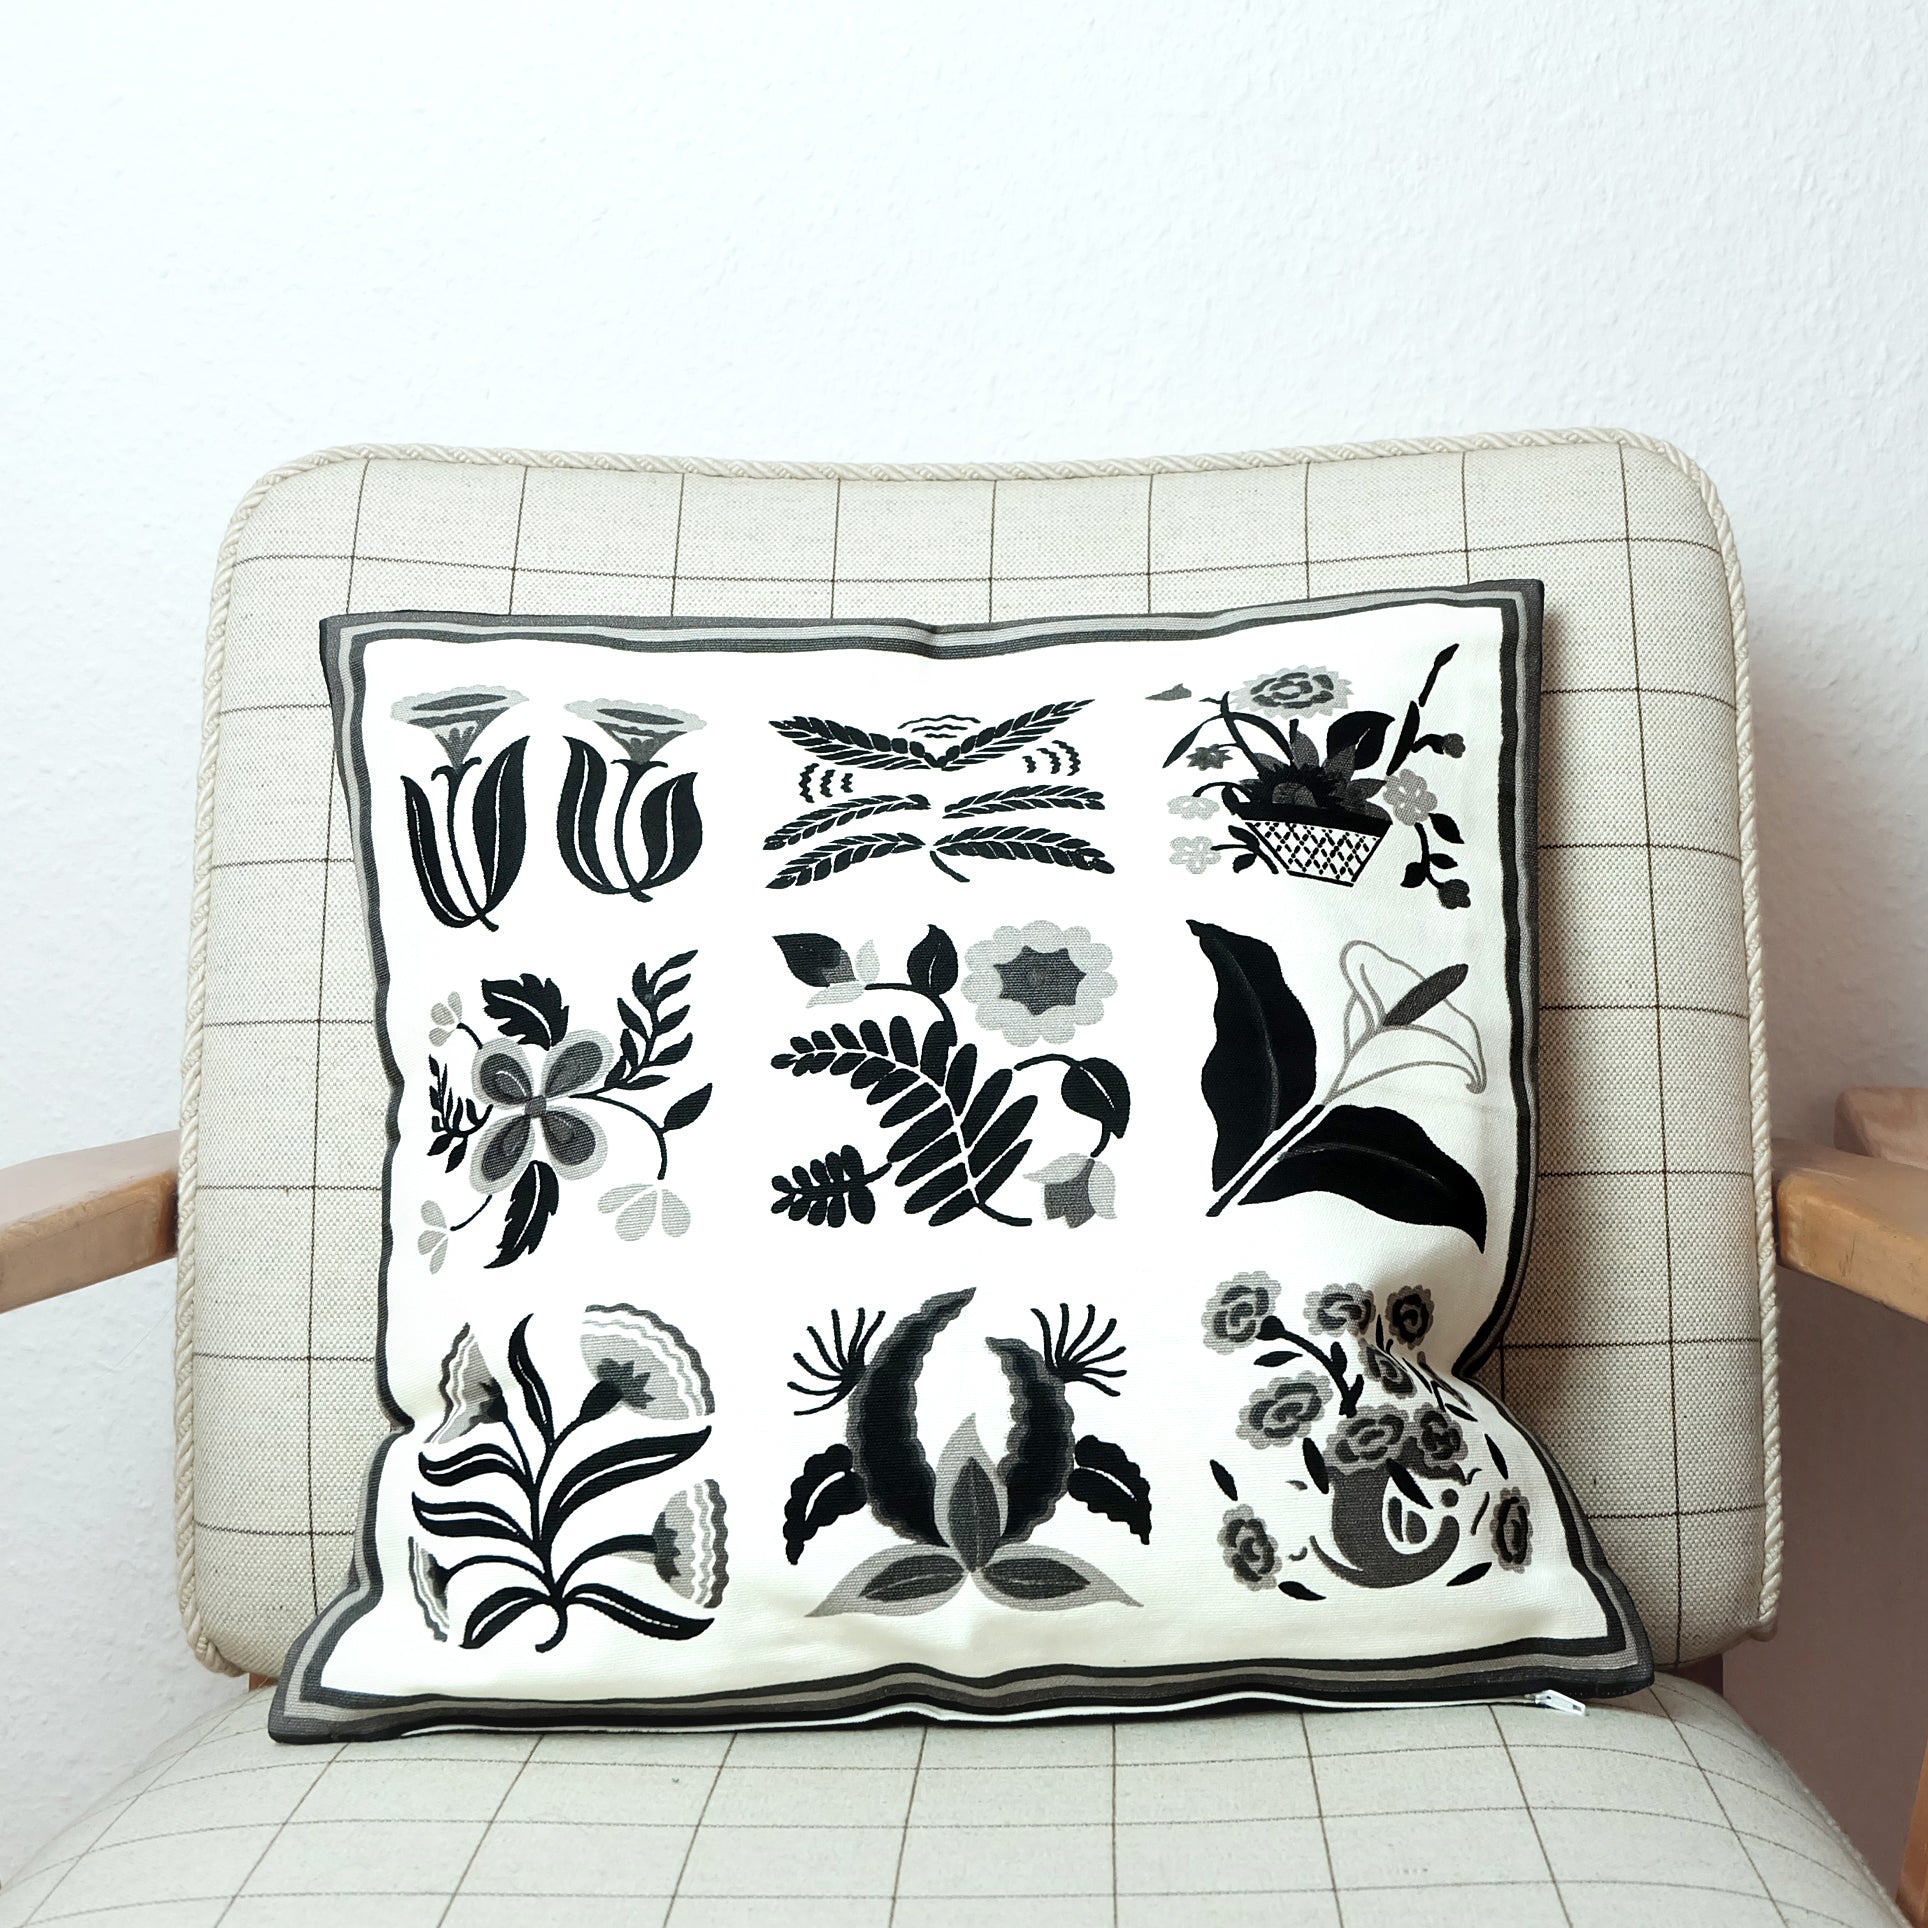 Vintage Handprint cushion cover - Summer Made